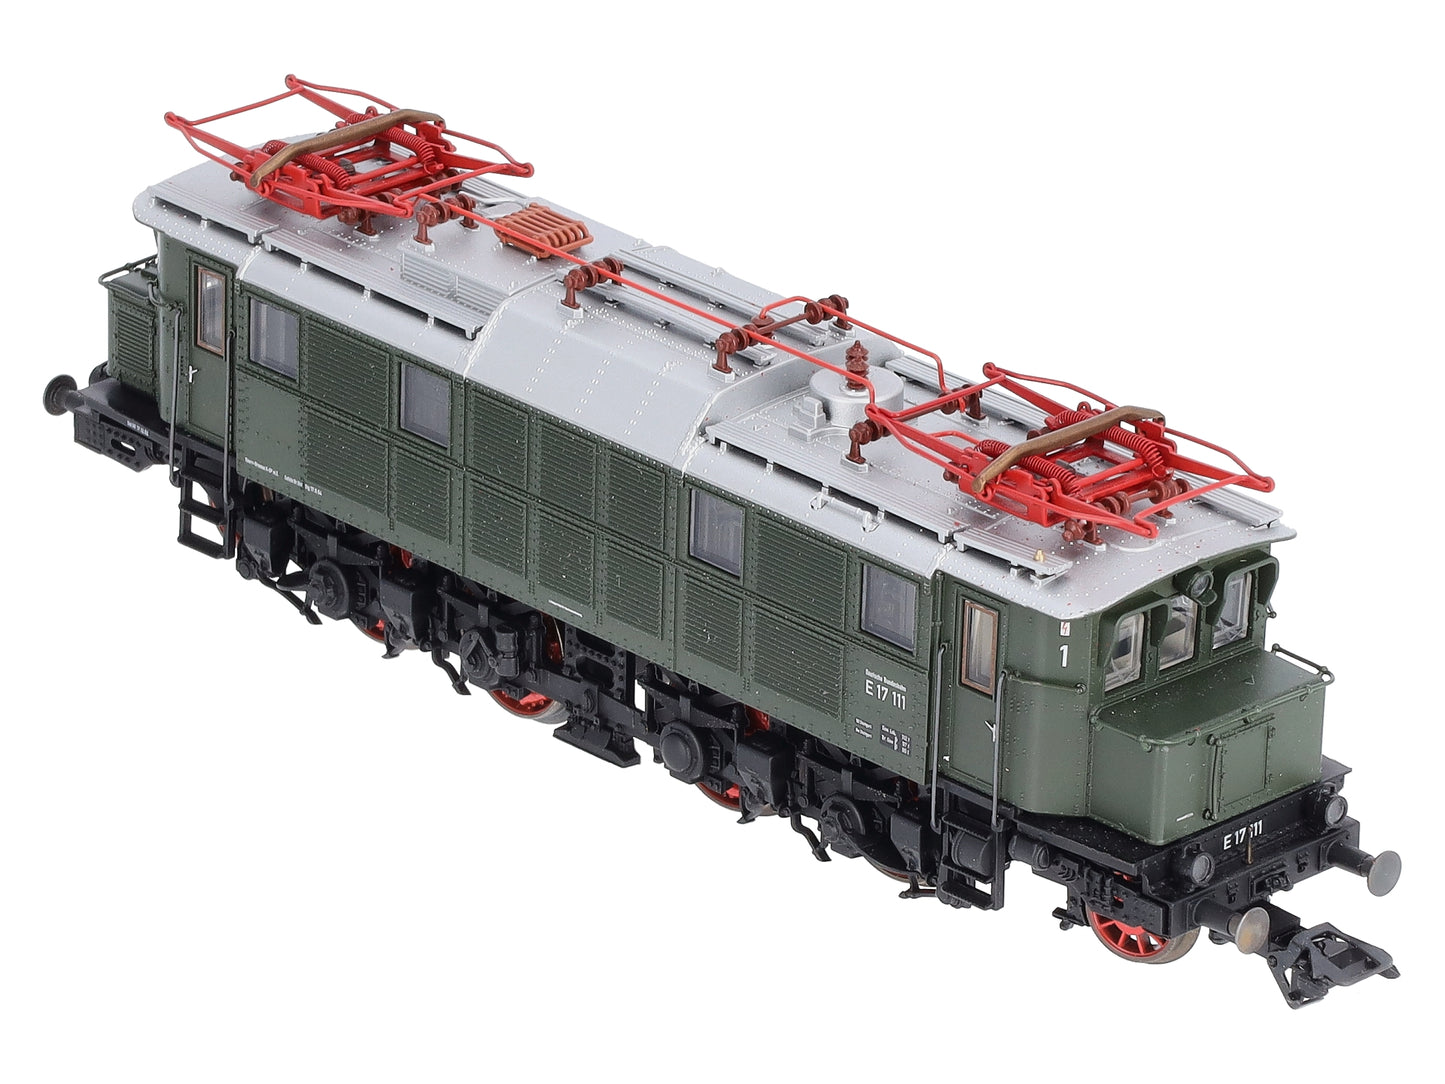 Trix 22172 HO German Federal Railroad (DB) Class E 17 Electric Locomotive